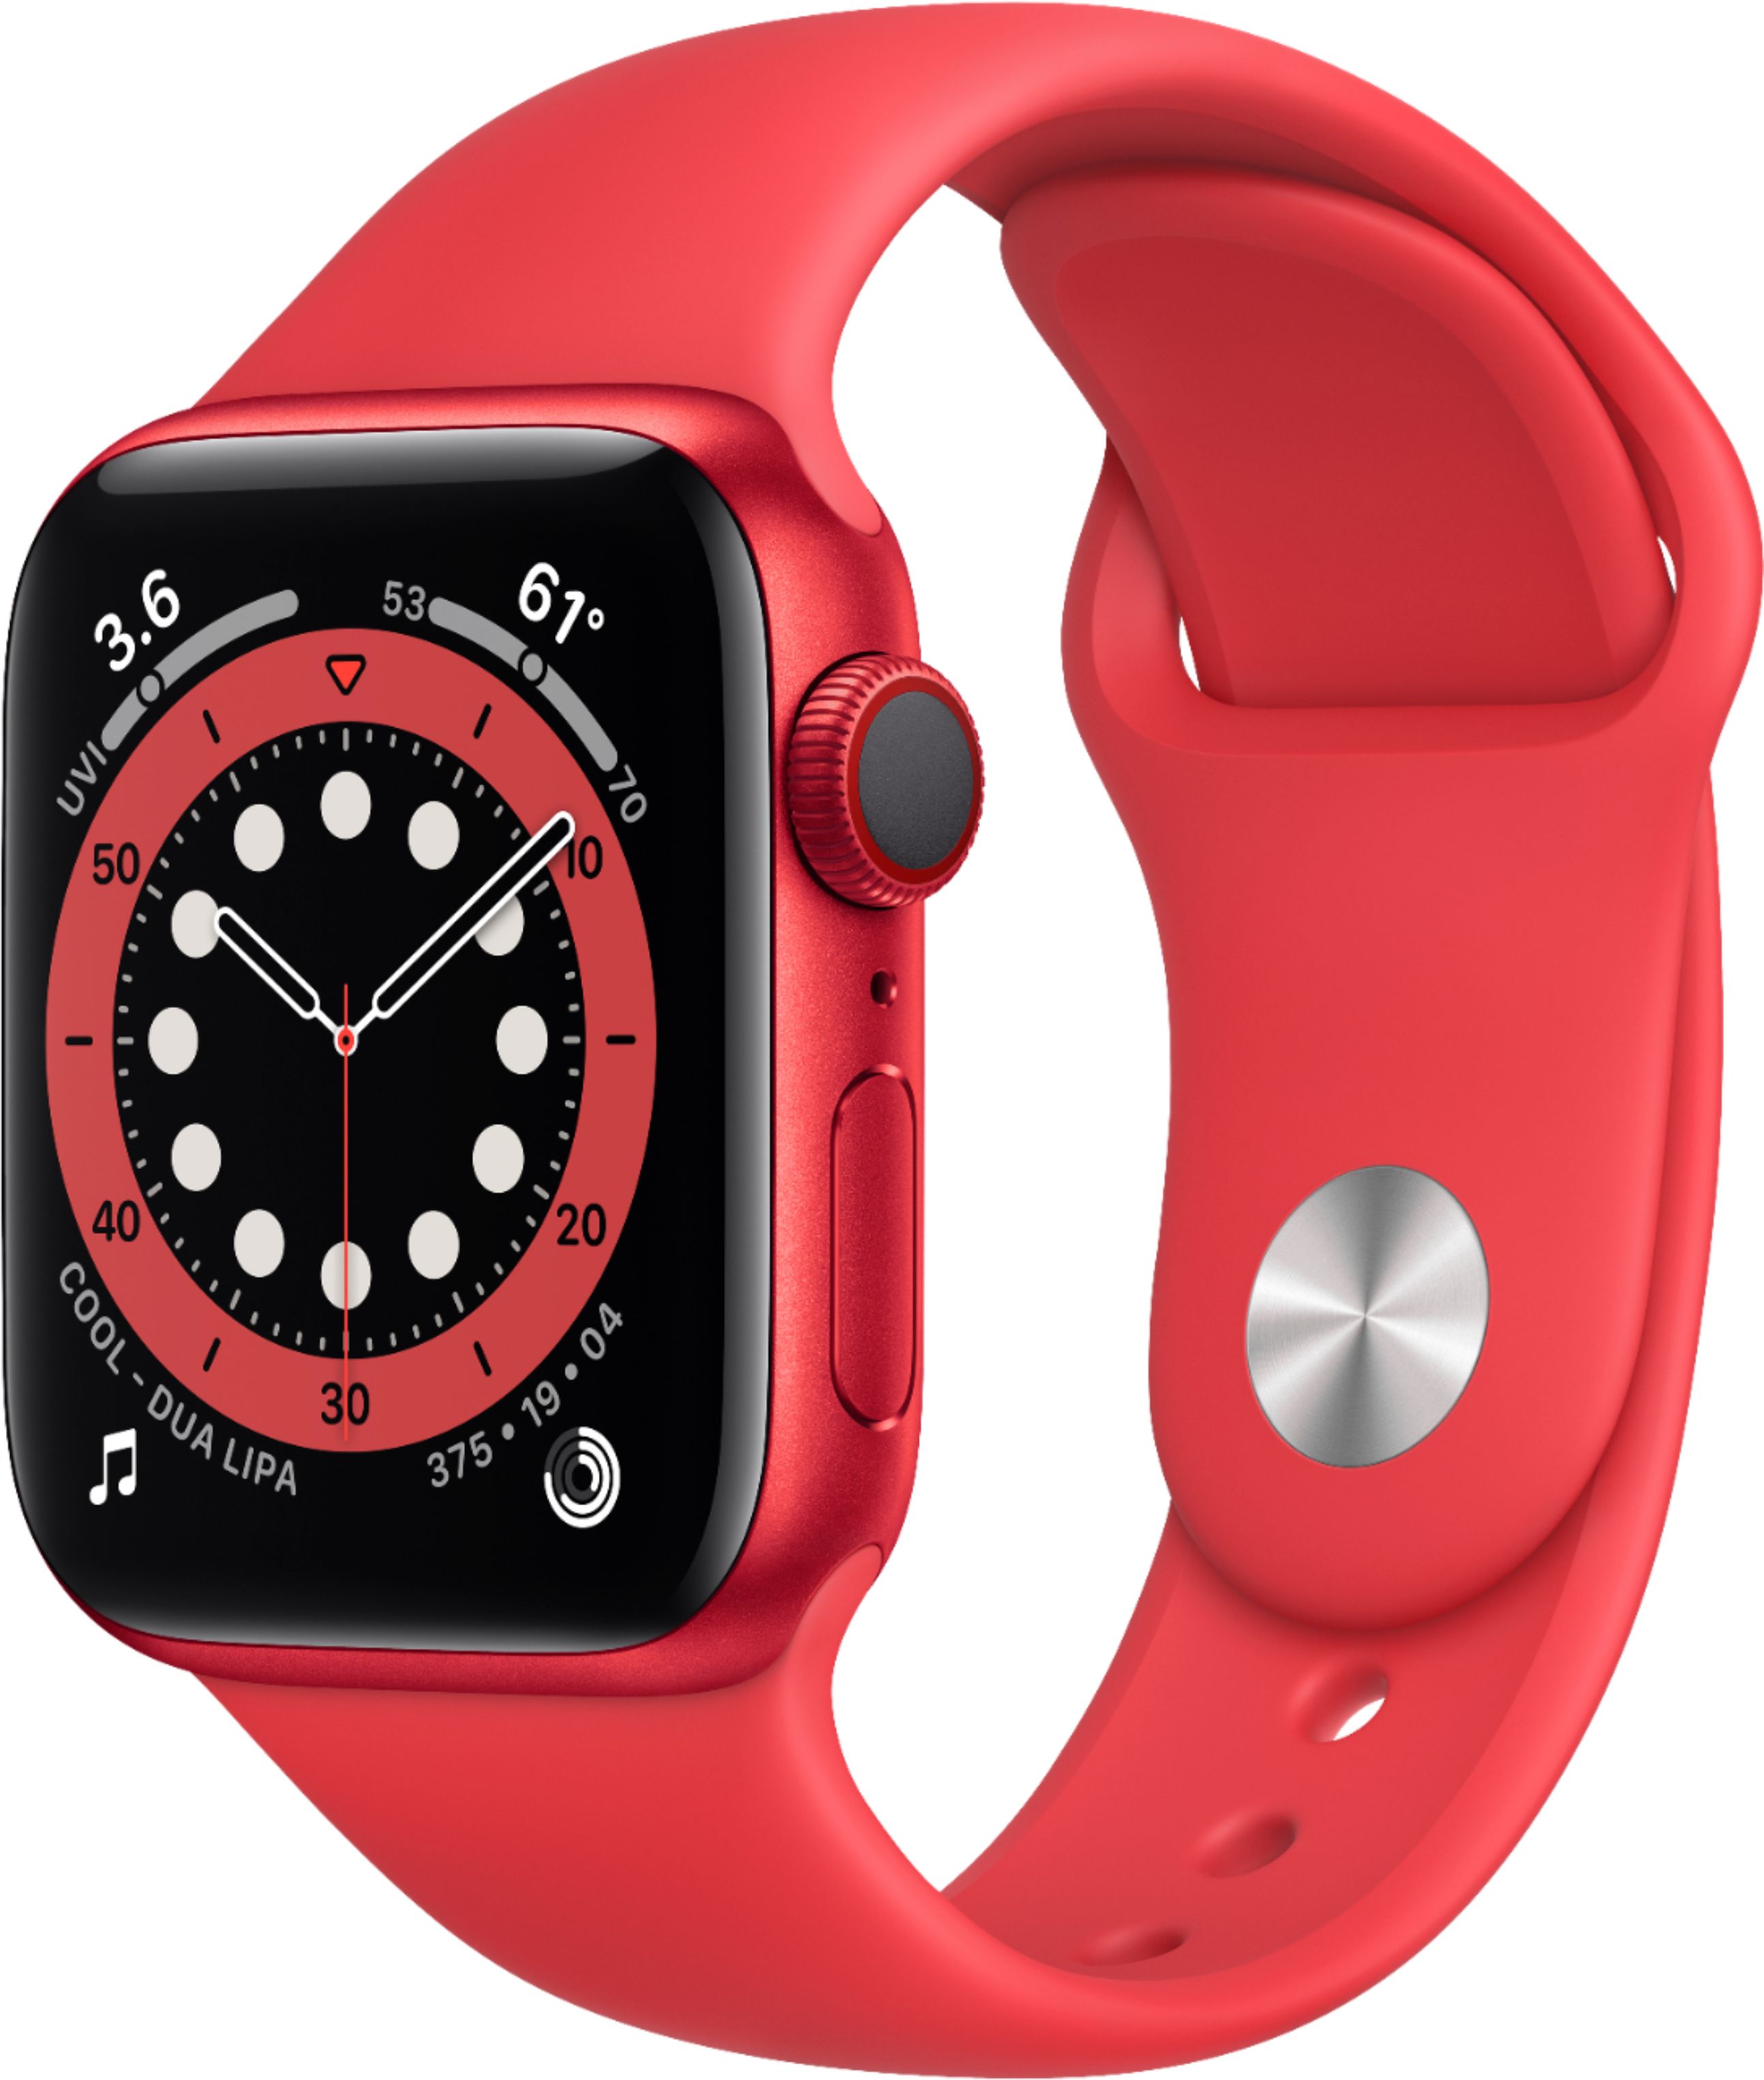 Apple Watch Series 6 (GPS + Cellular) 44mm Aluminum - Best Buy